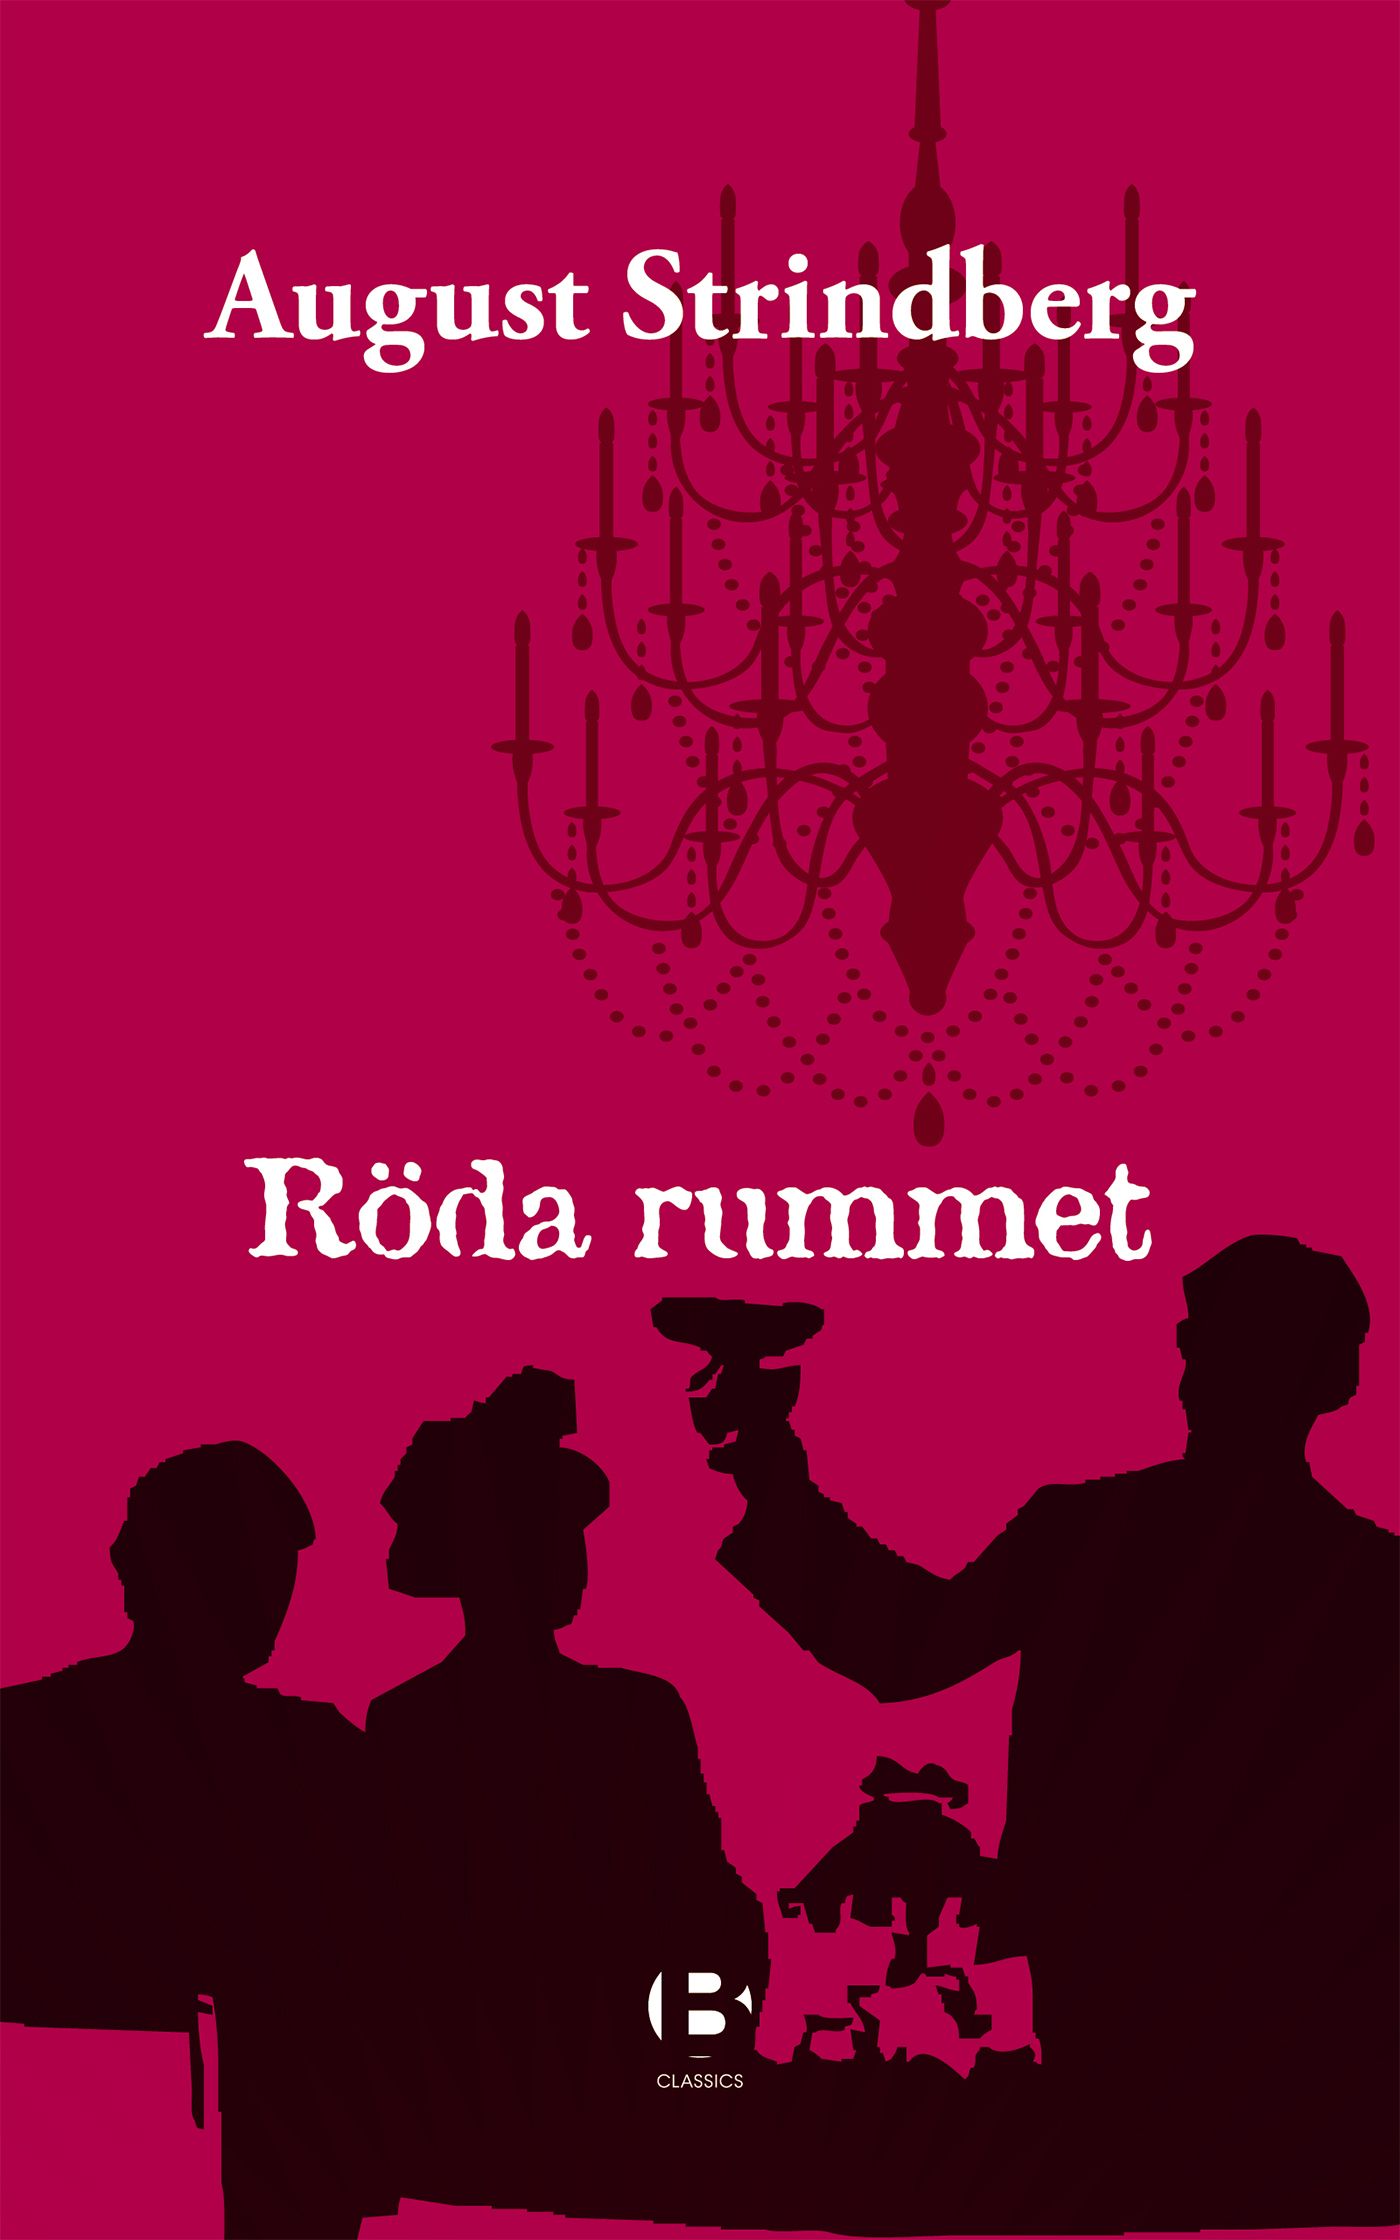 Röda rummet, e-bog af August Strindberg